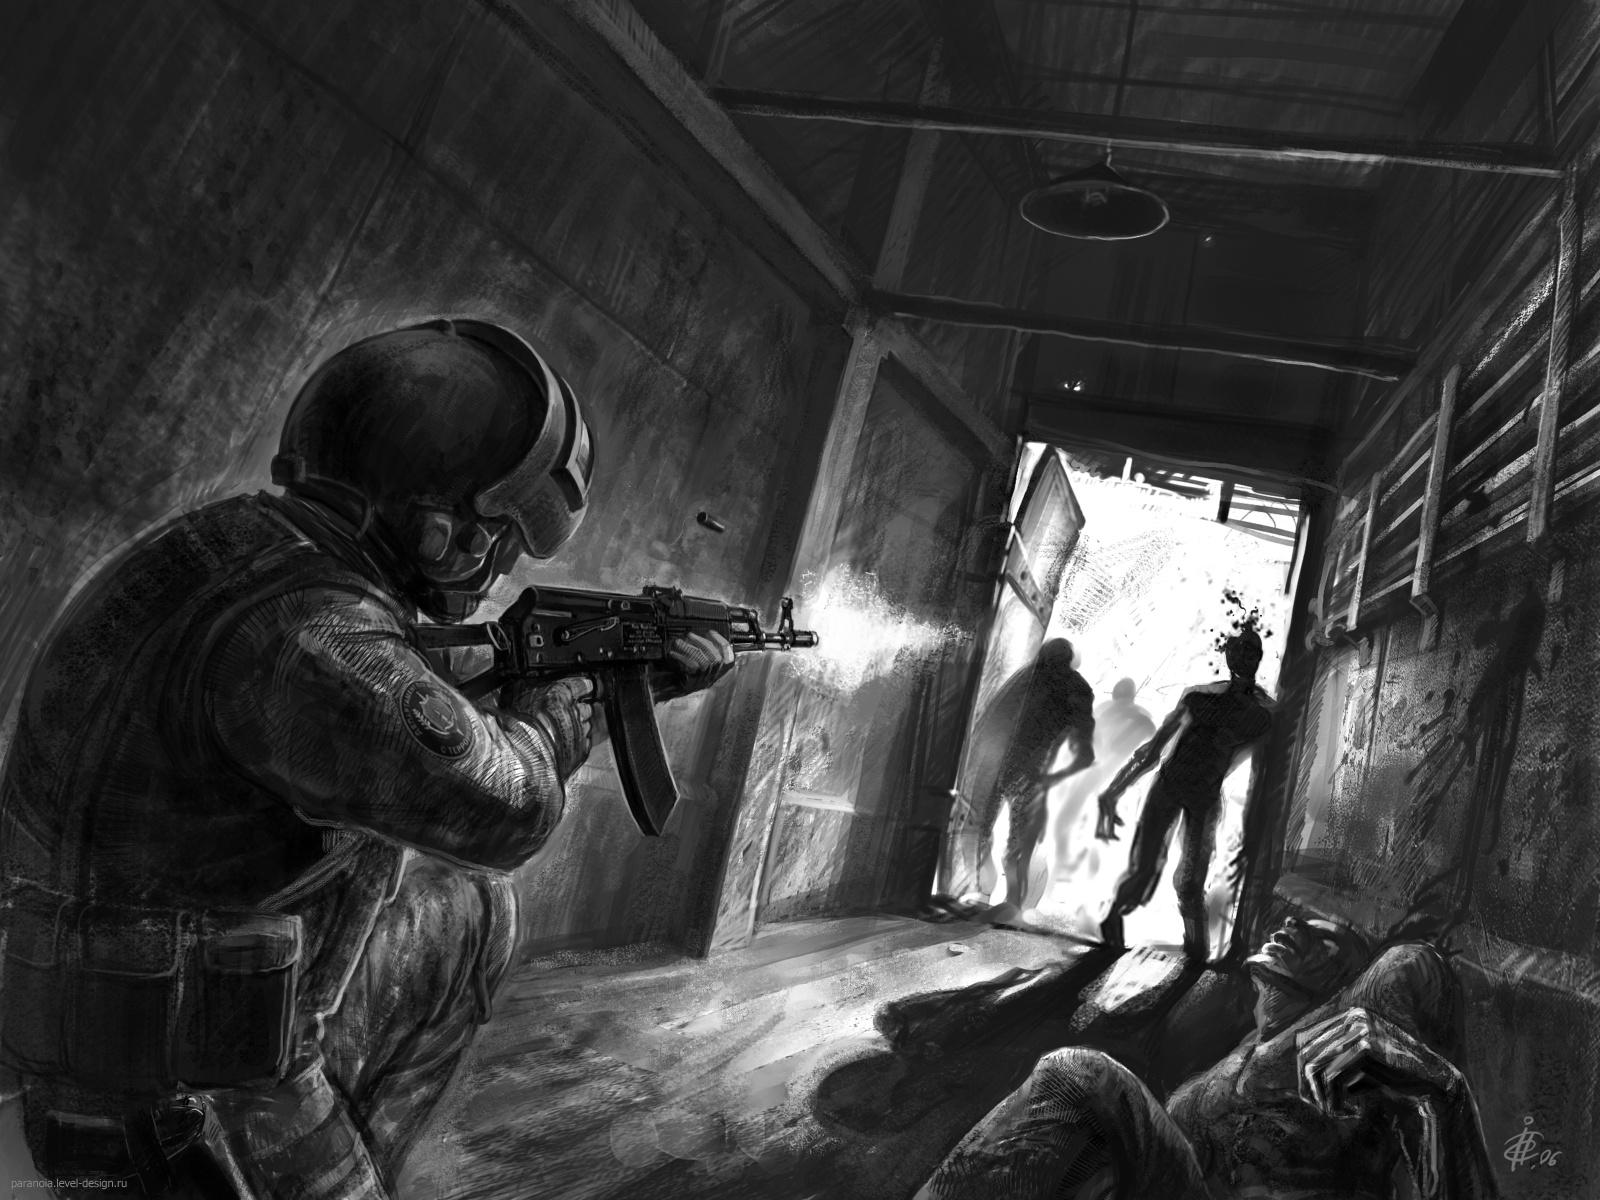 45+] Zombie Apocalypse Wallpaper HD - WallpaperSafari